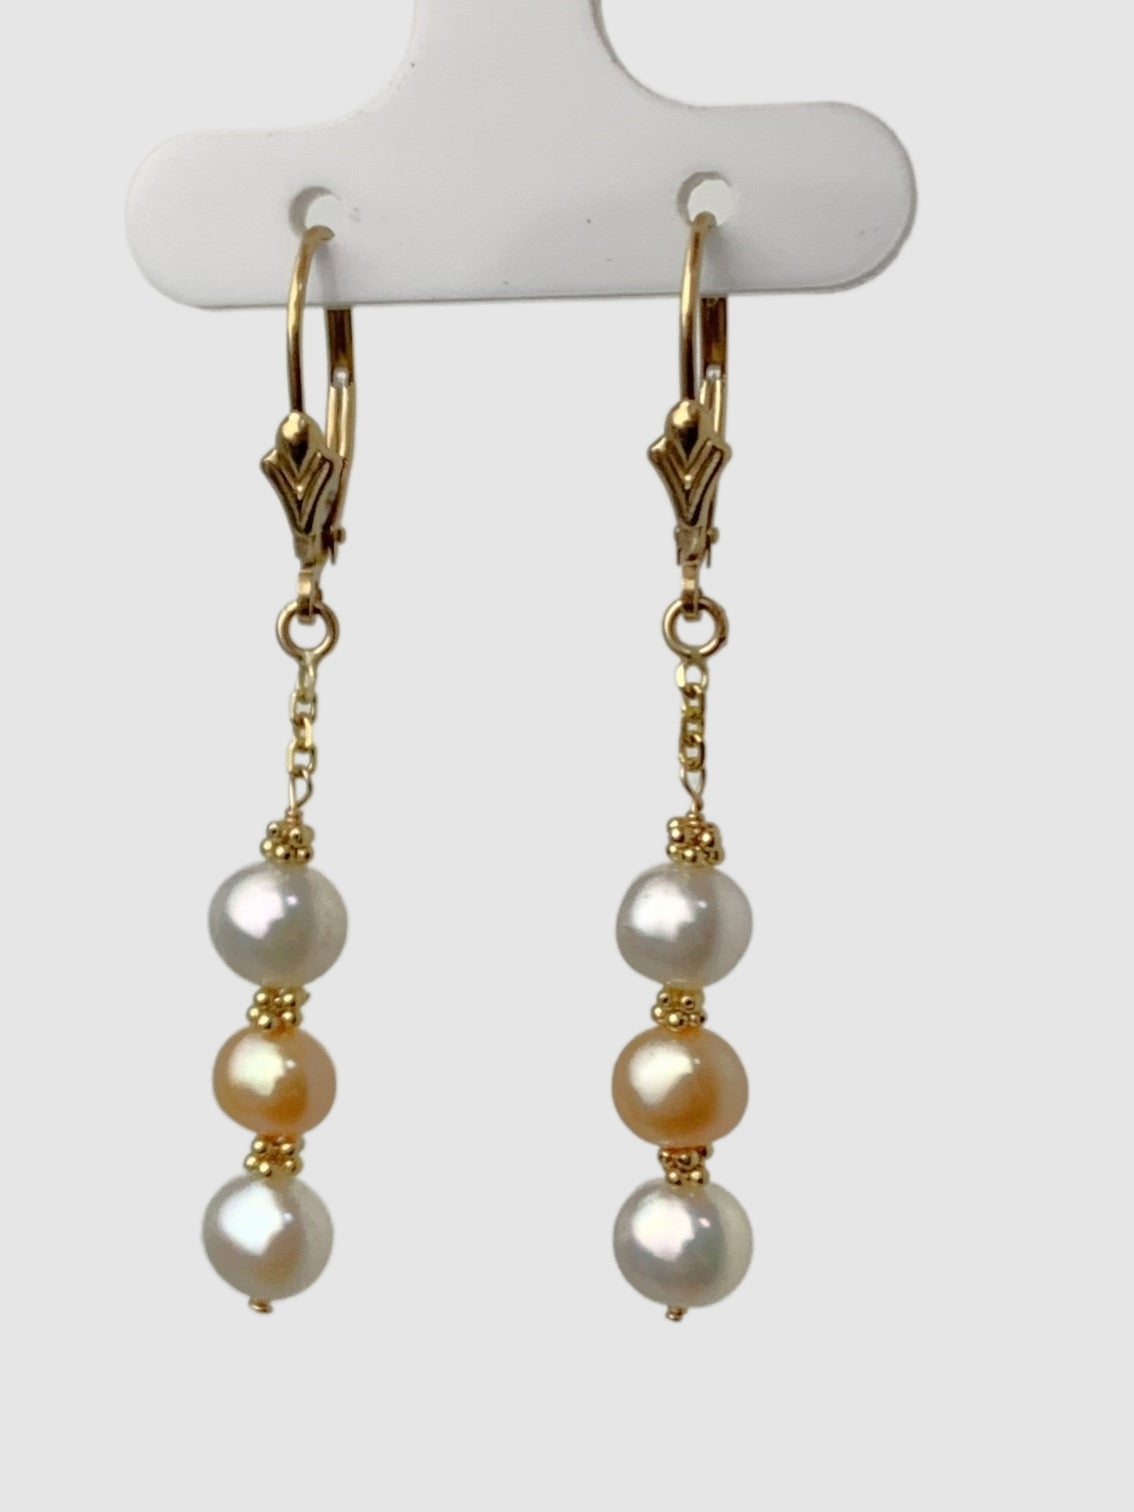 Pearl and Rondelle Drop Earrings in 14KY - EAR-015-WIREPRL14Y-M2